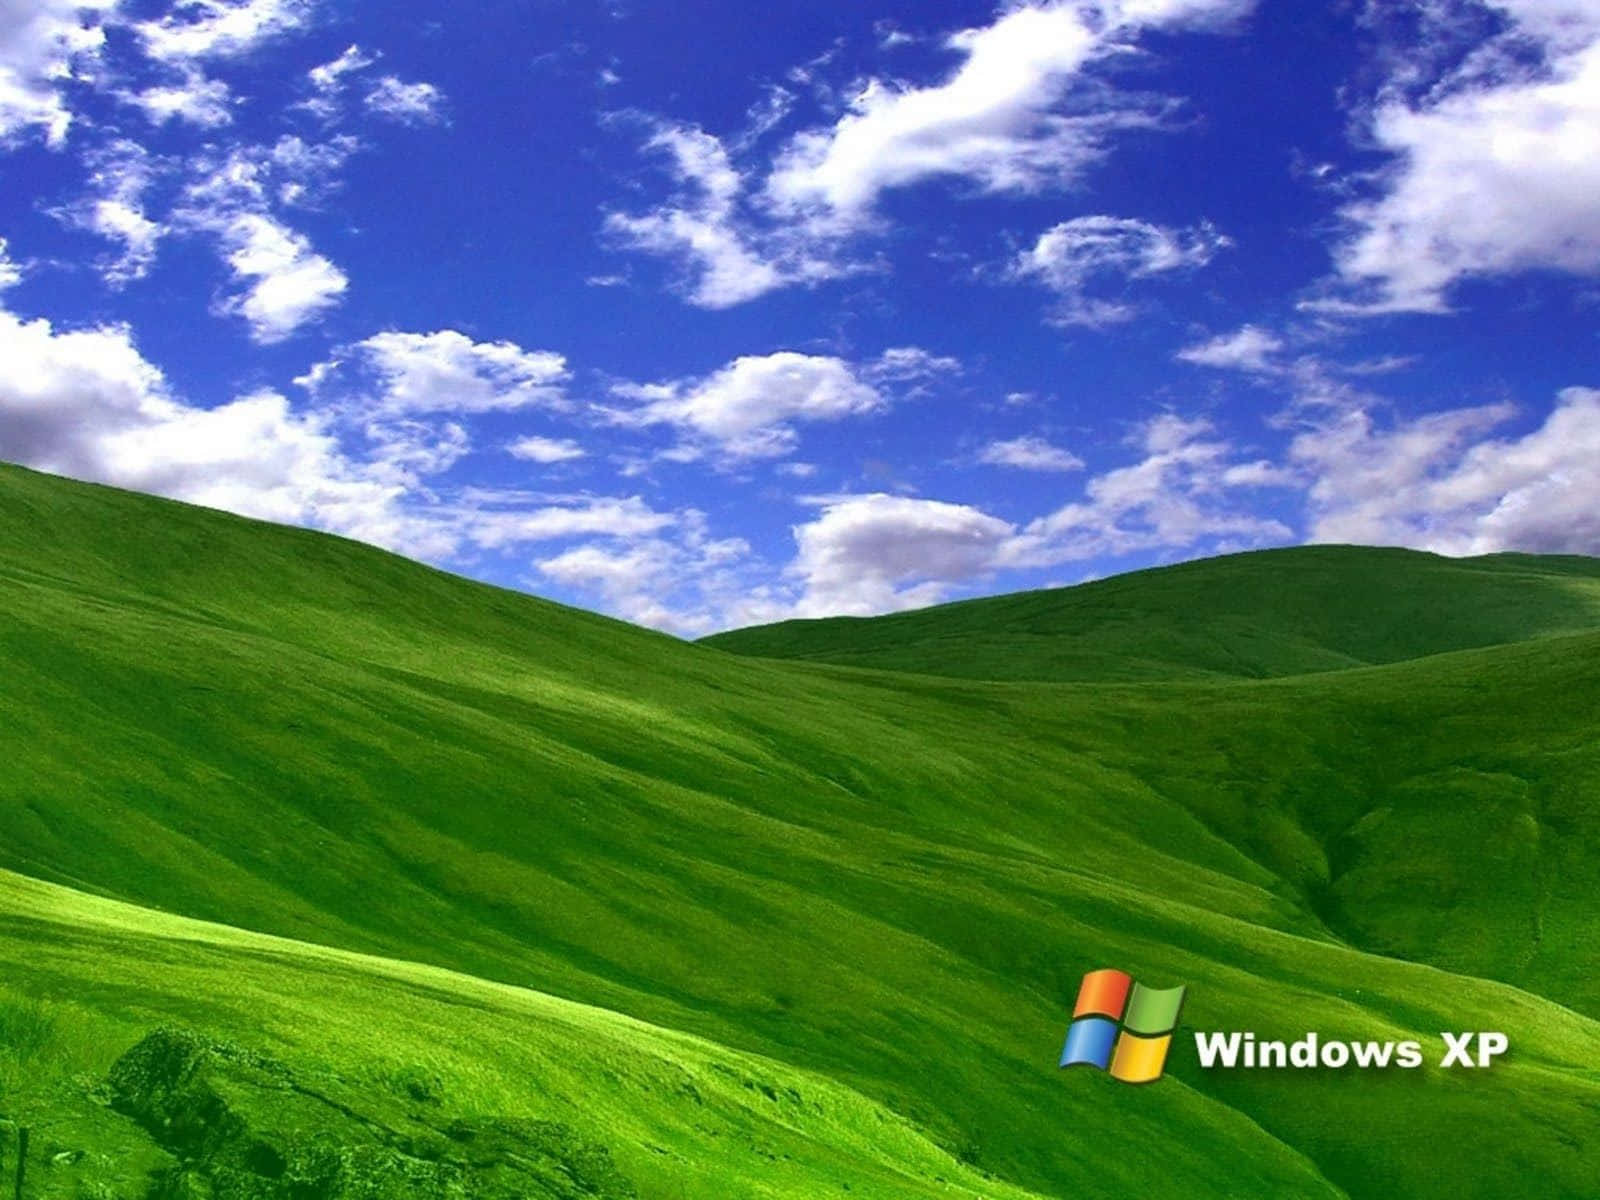 Enjoy the vintage look of Windows Xp